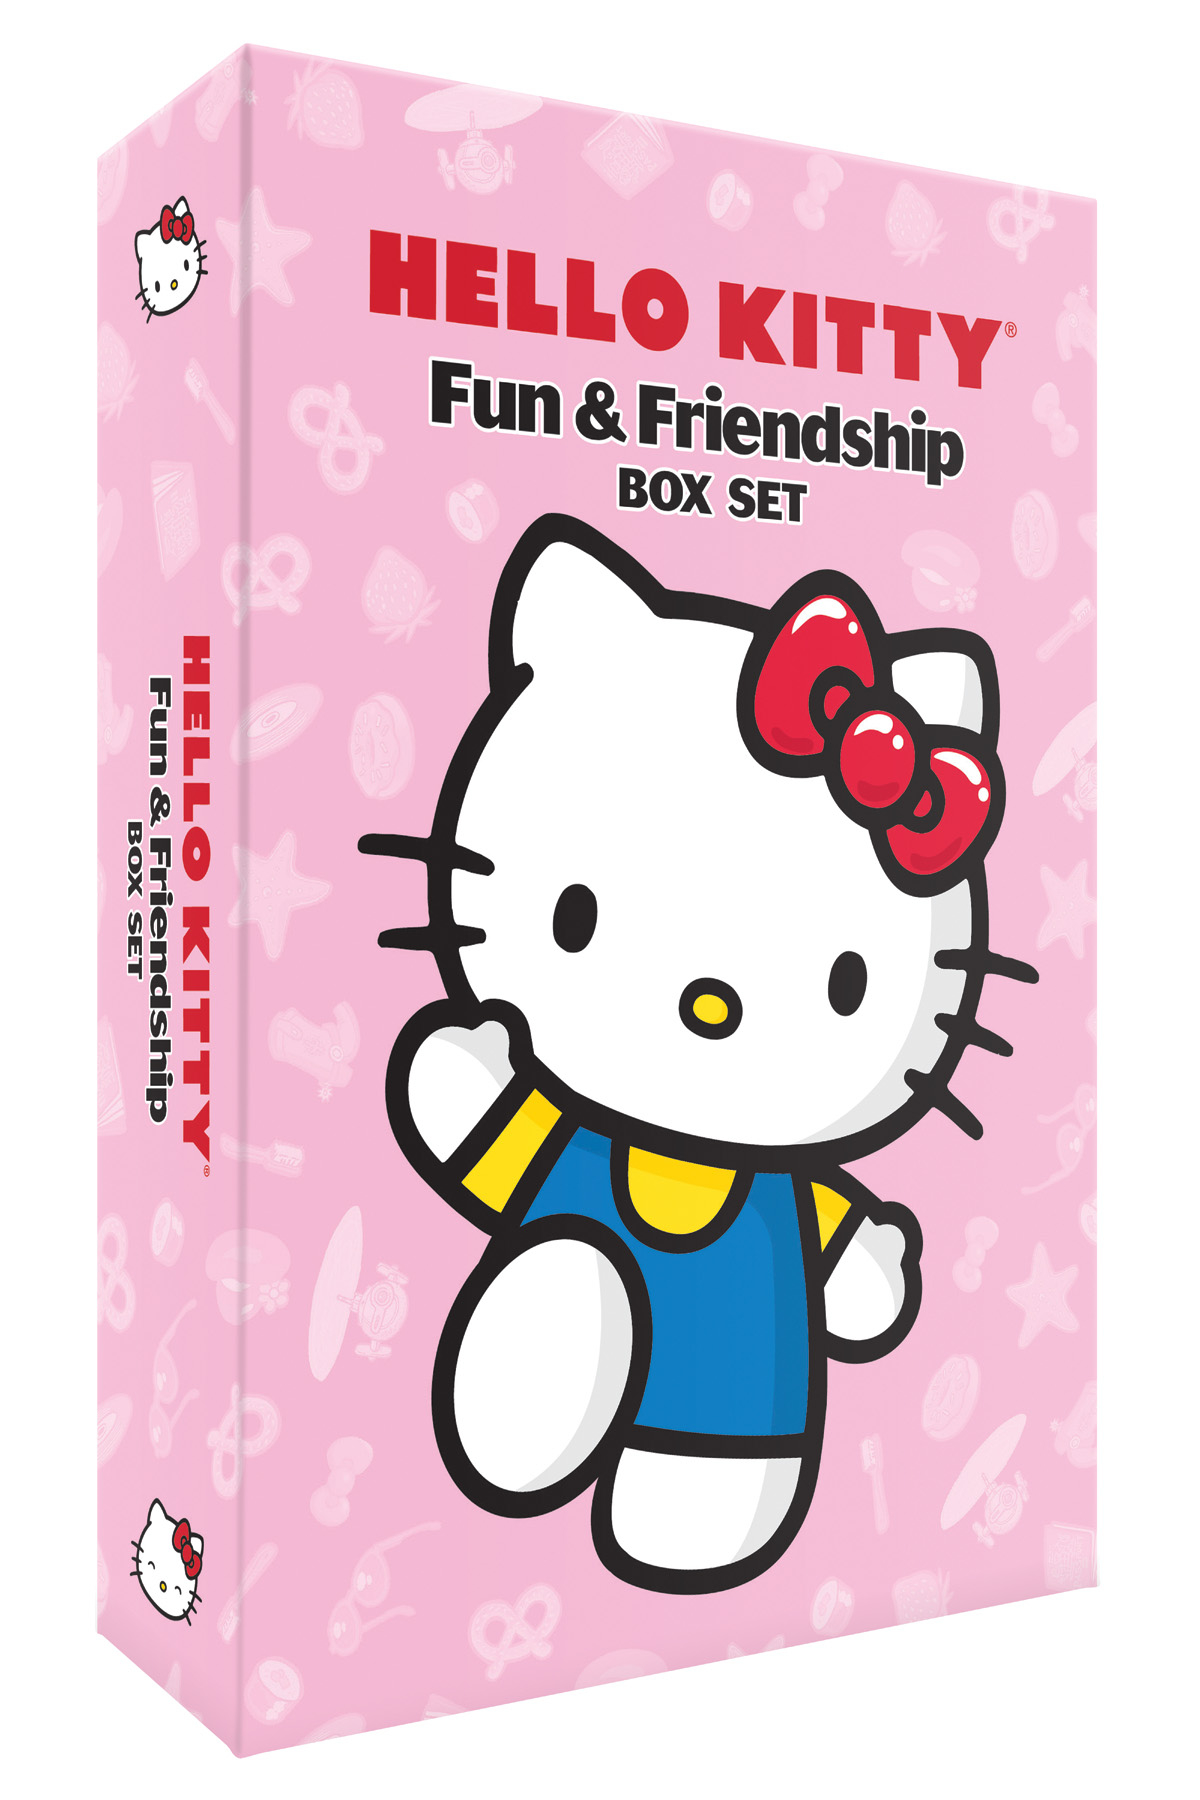 HELLO KITTY FUN & FRIENDSHIP BOX SET VOL 01